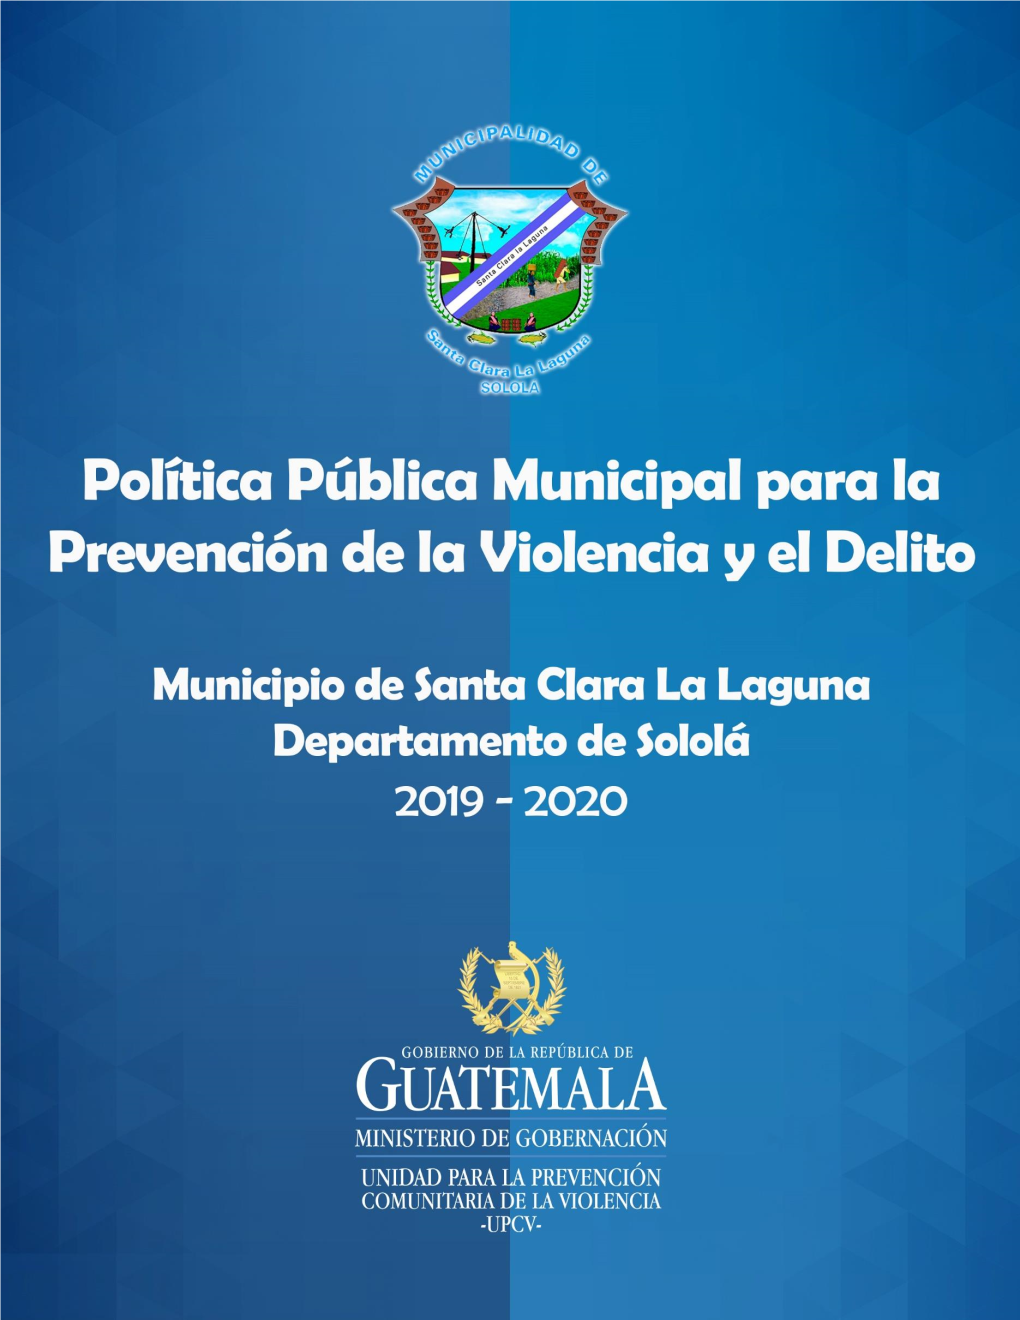 Santa Clara La Laguna